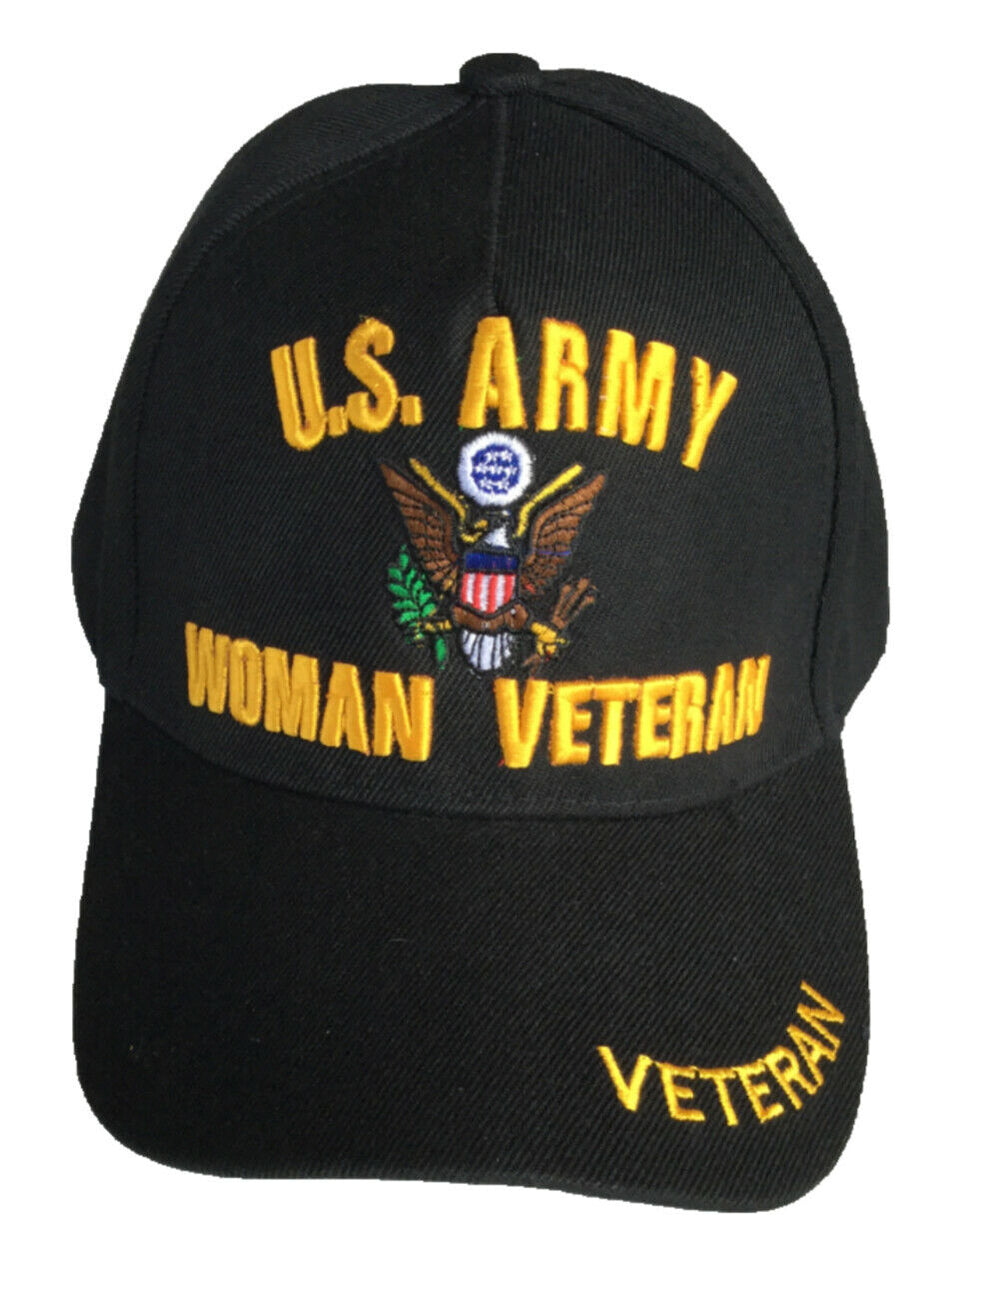 U.S Army Women Veteran Cap